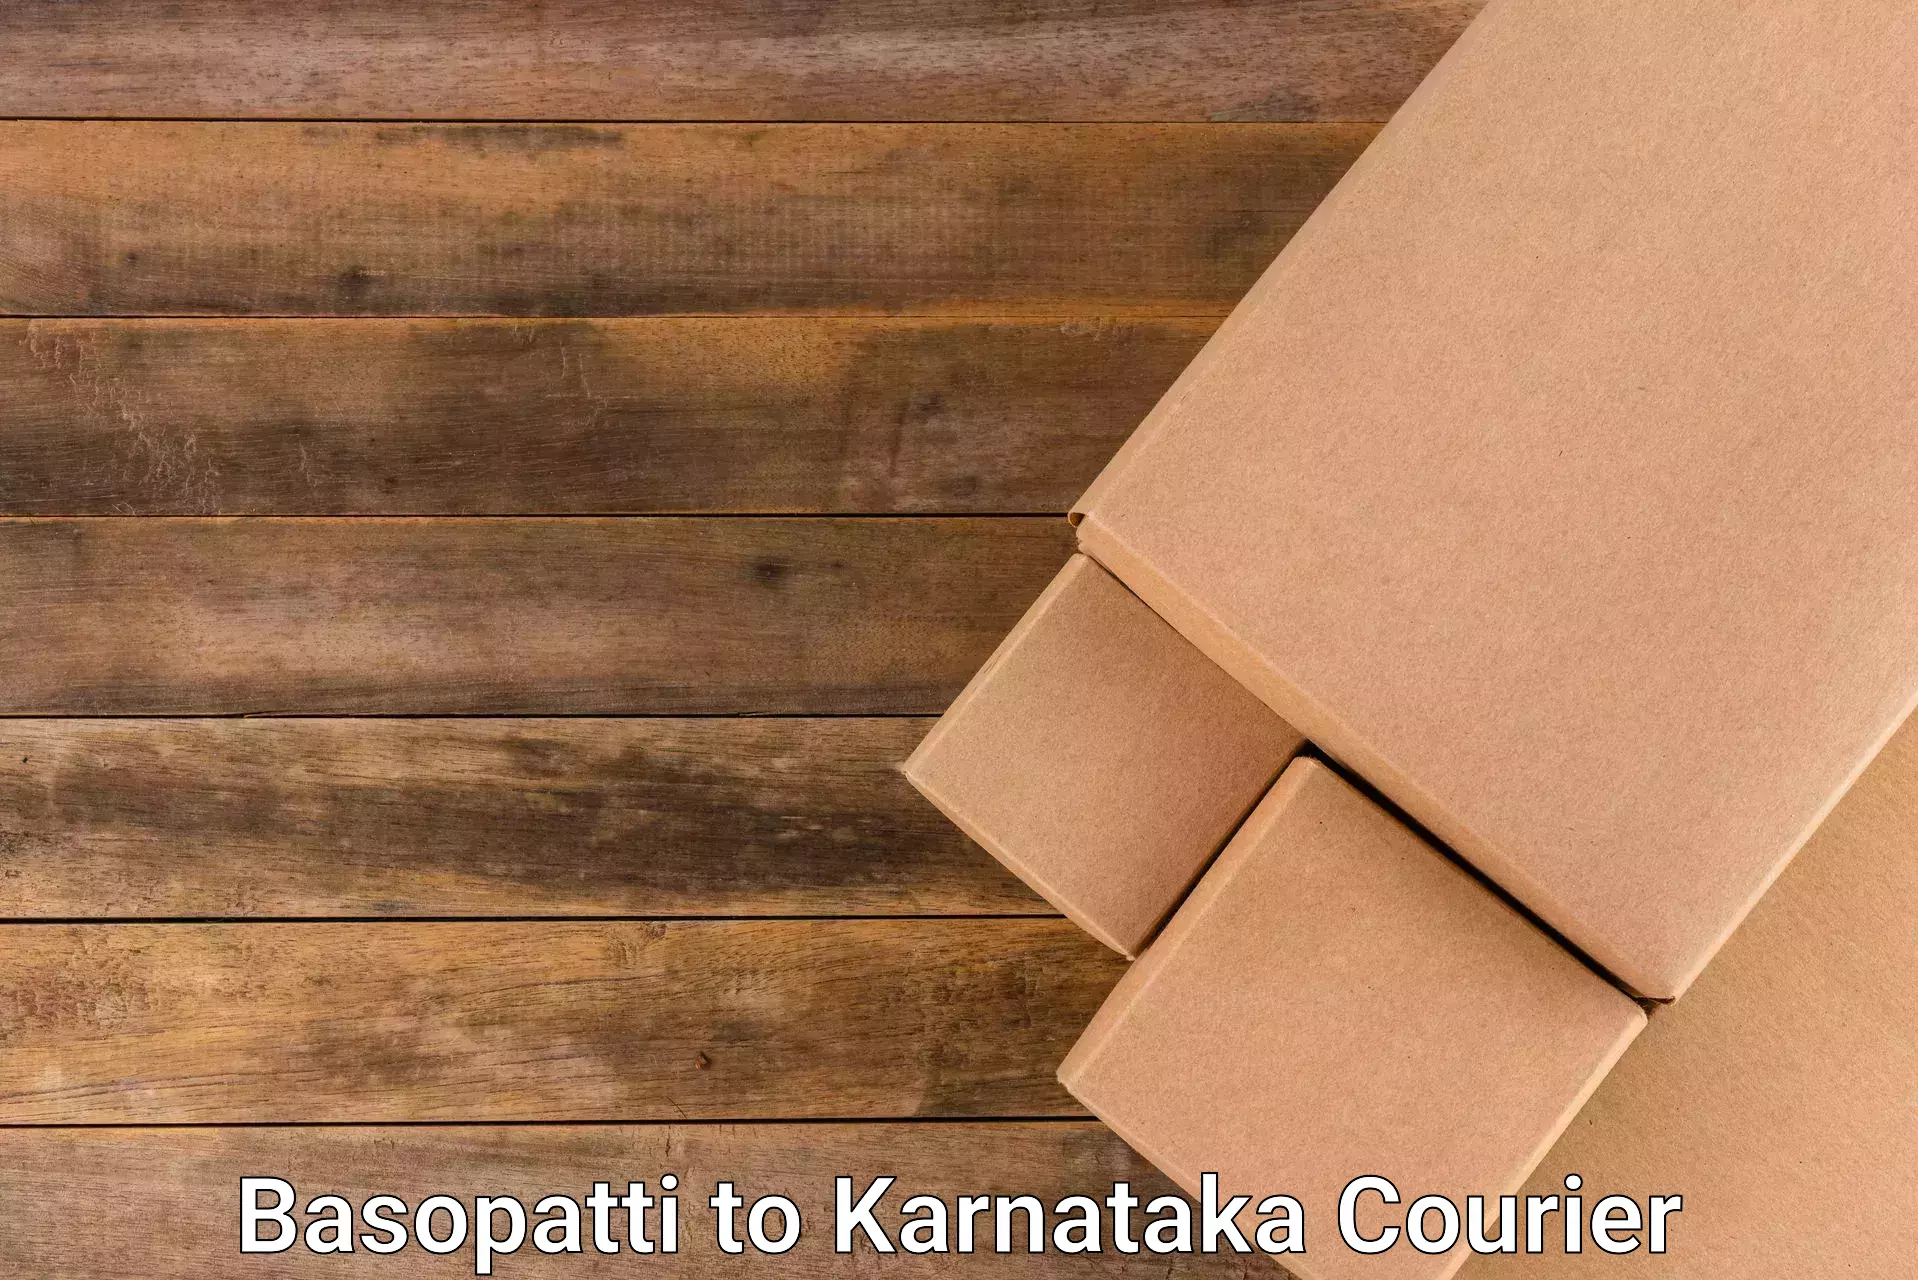 Reliable delivery network Basopatti to Karnataka